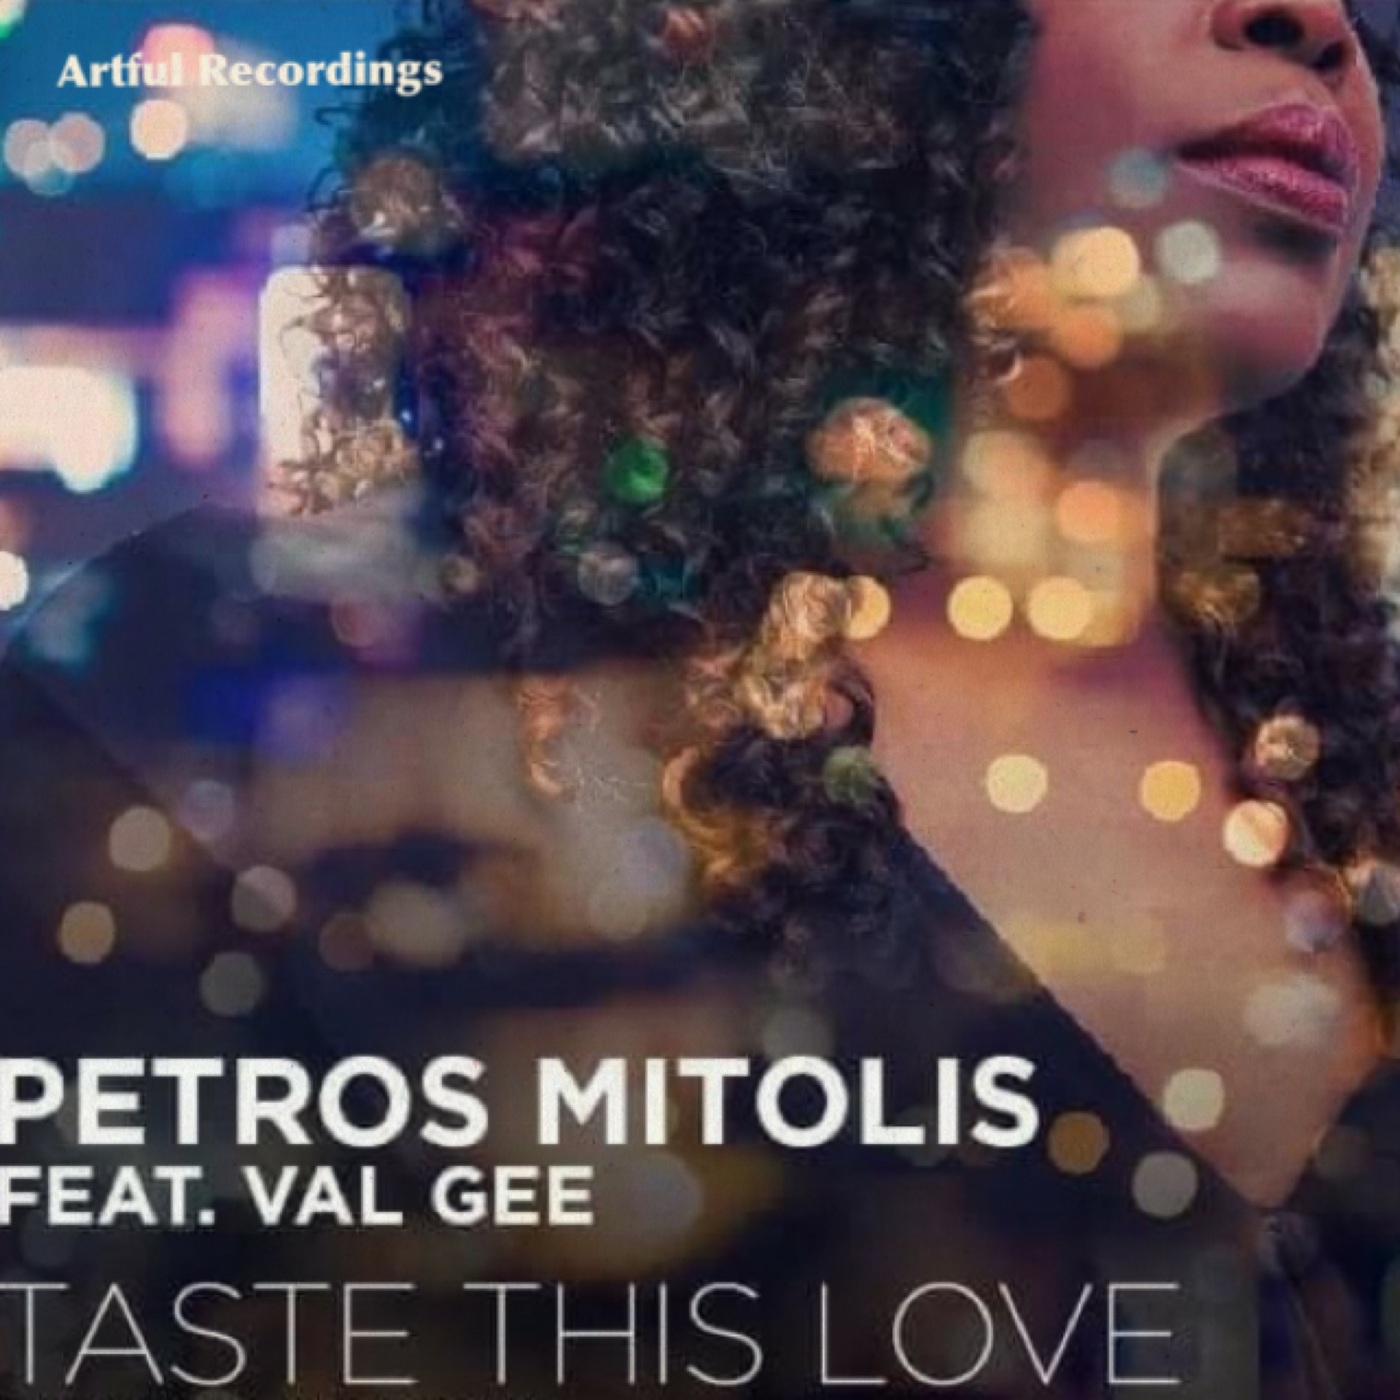 Petros Mitolis - Taste This Love feat. Val Gee / Artful Recordings